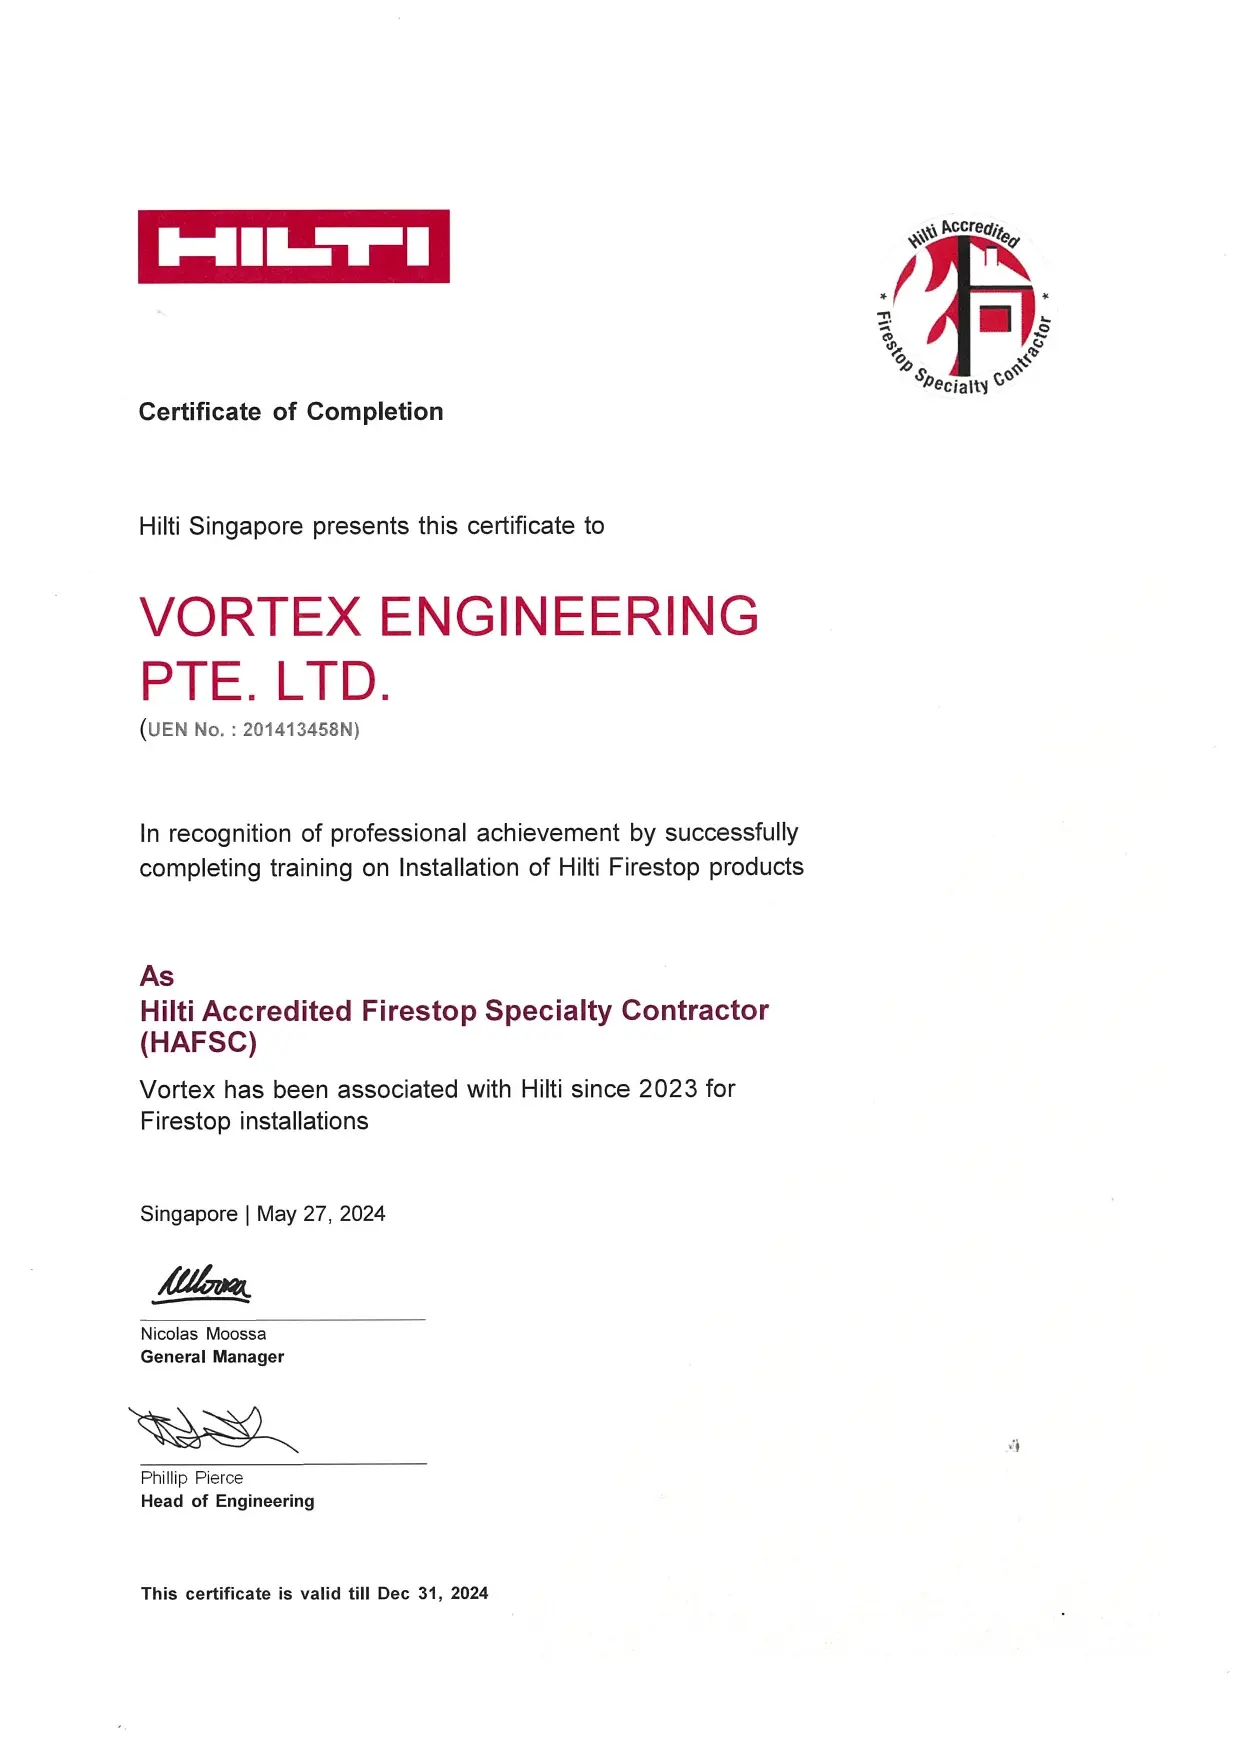 Hilti Accredited Firestop Specialty Contractor Certificate